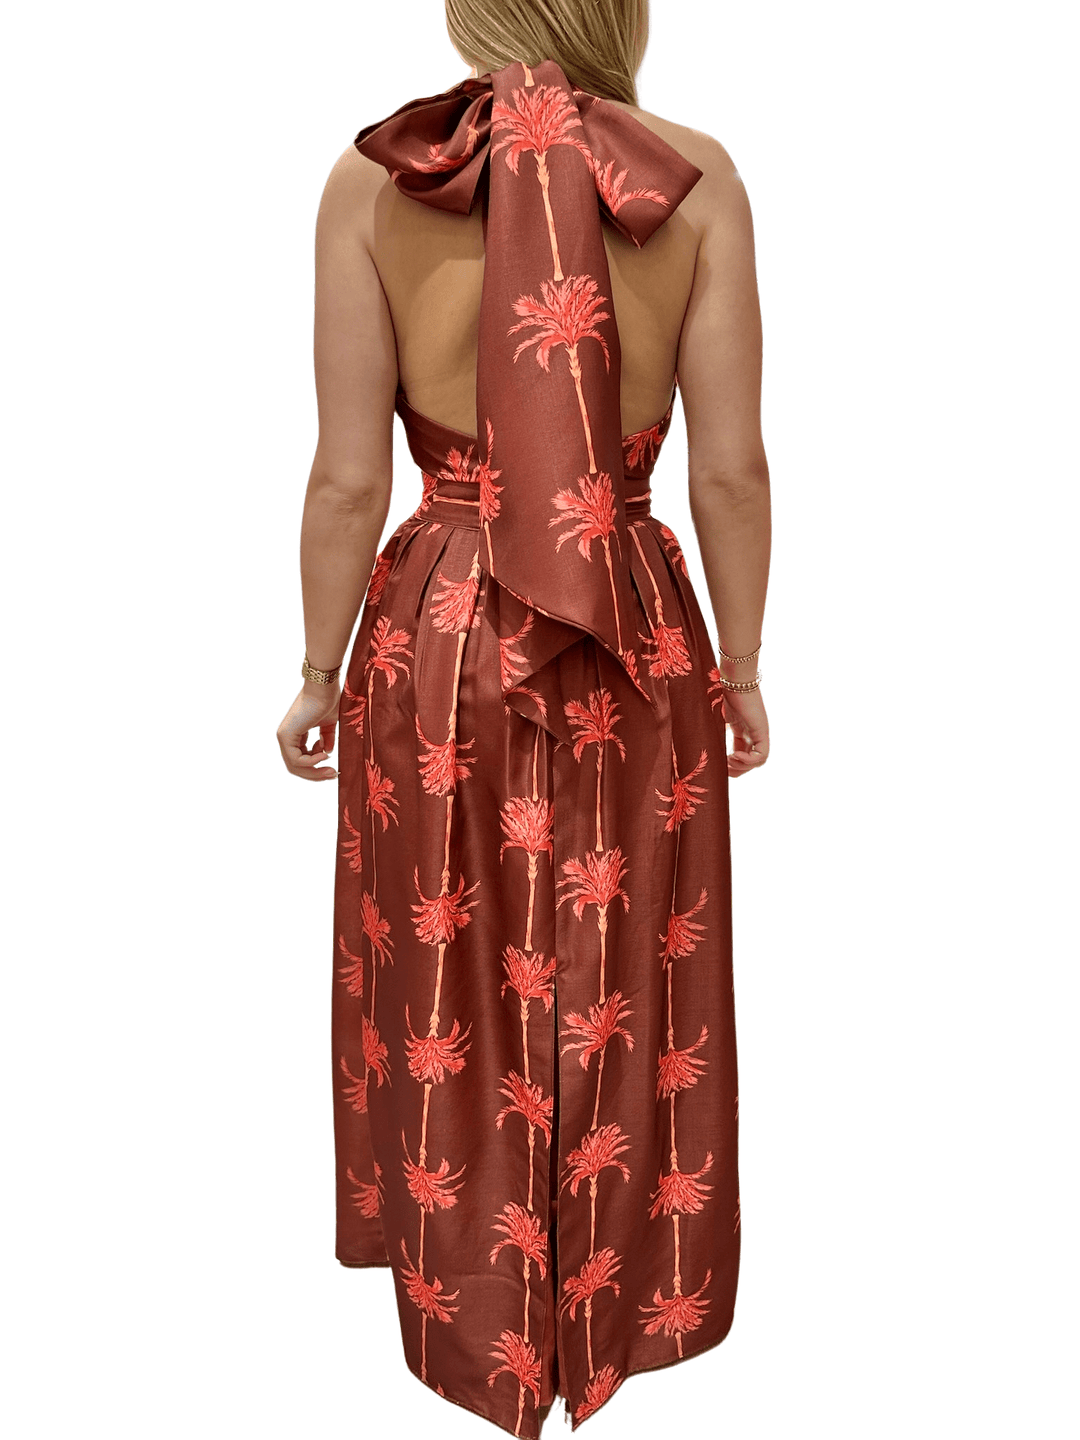 En Saison Halter Maxi Dress - Capri by Sunset & Co.